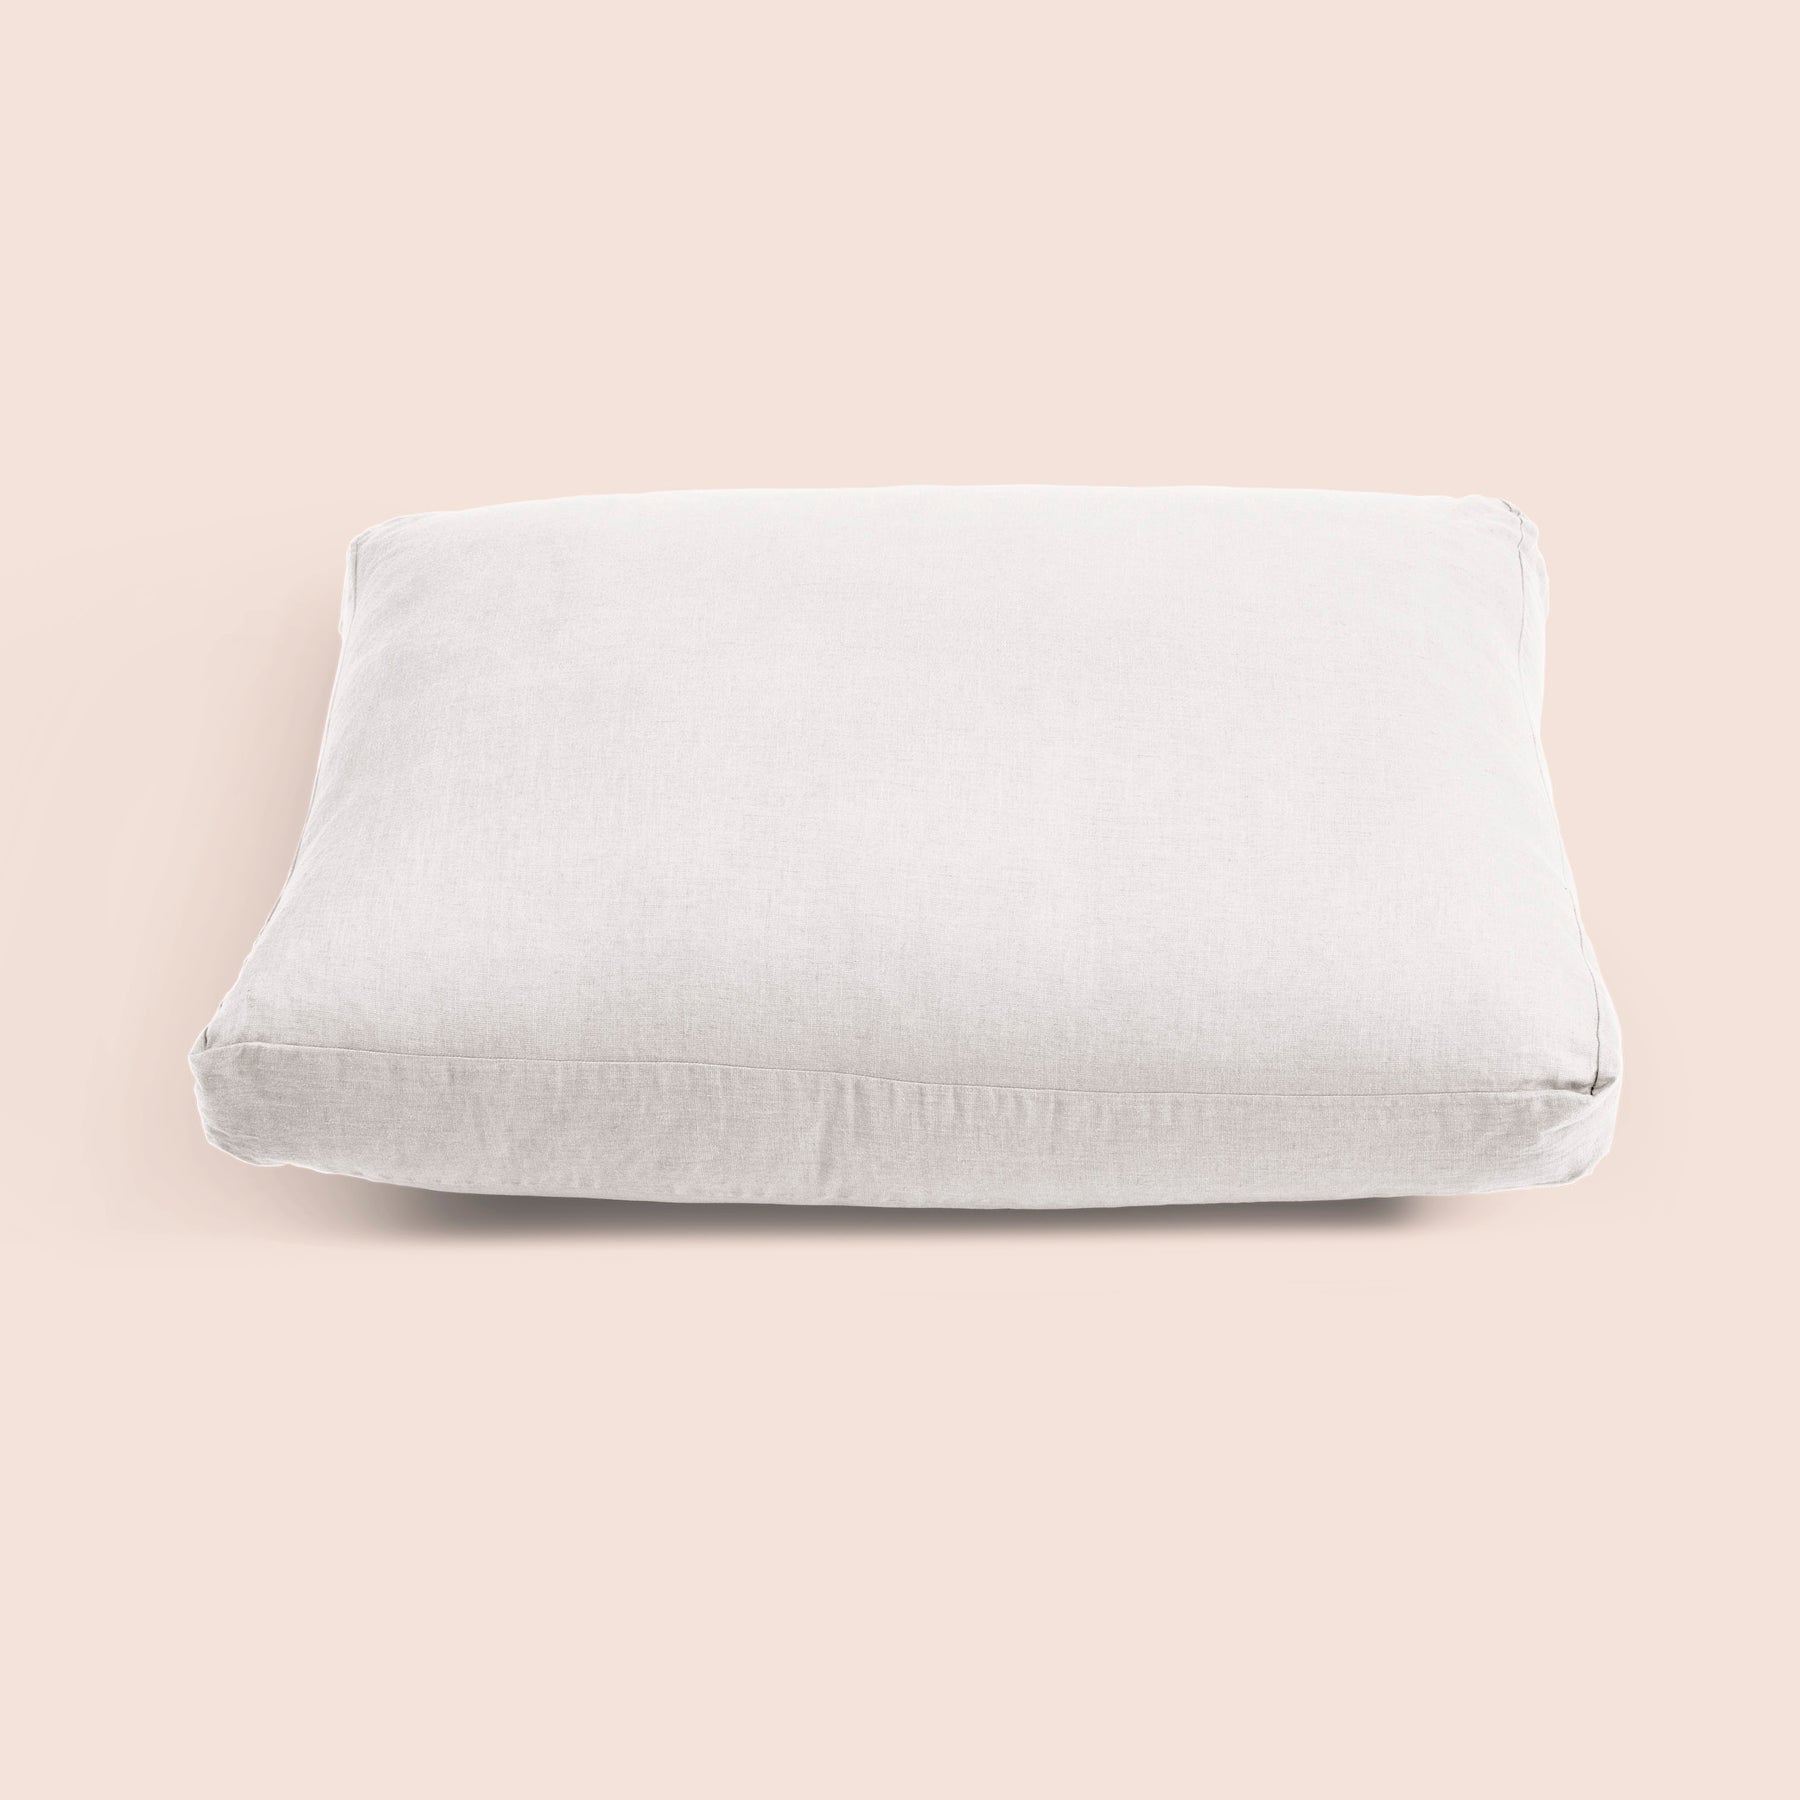 Dr. Weil Blended Linen Meditation Cushion Cover